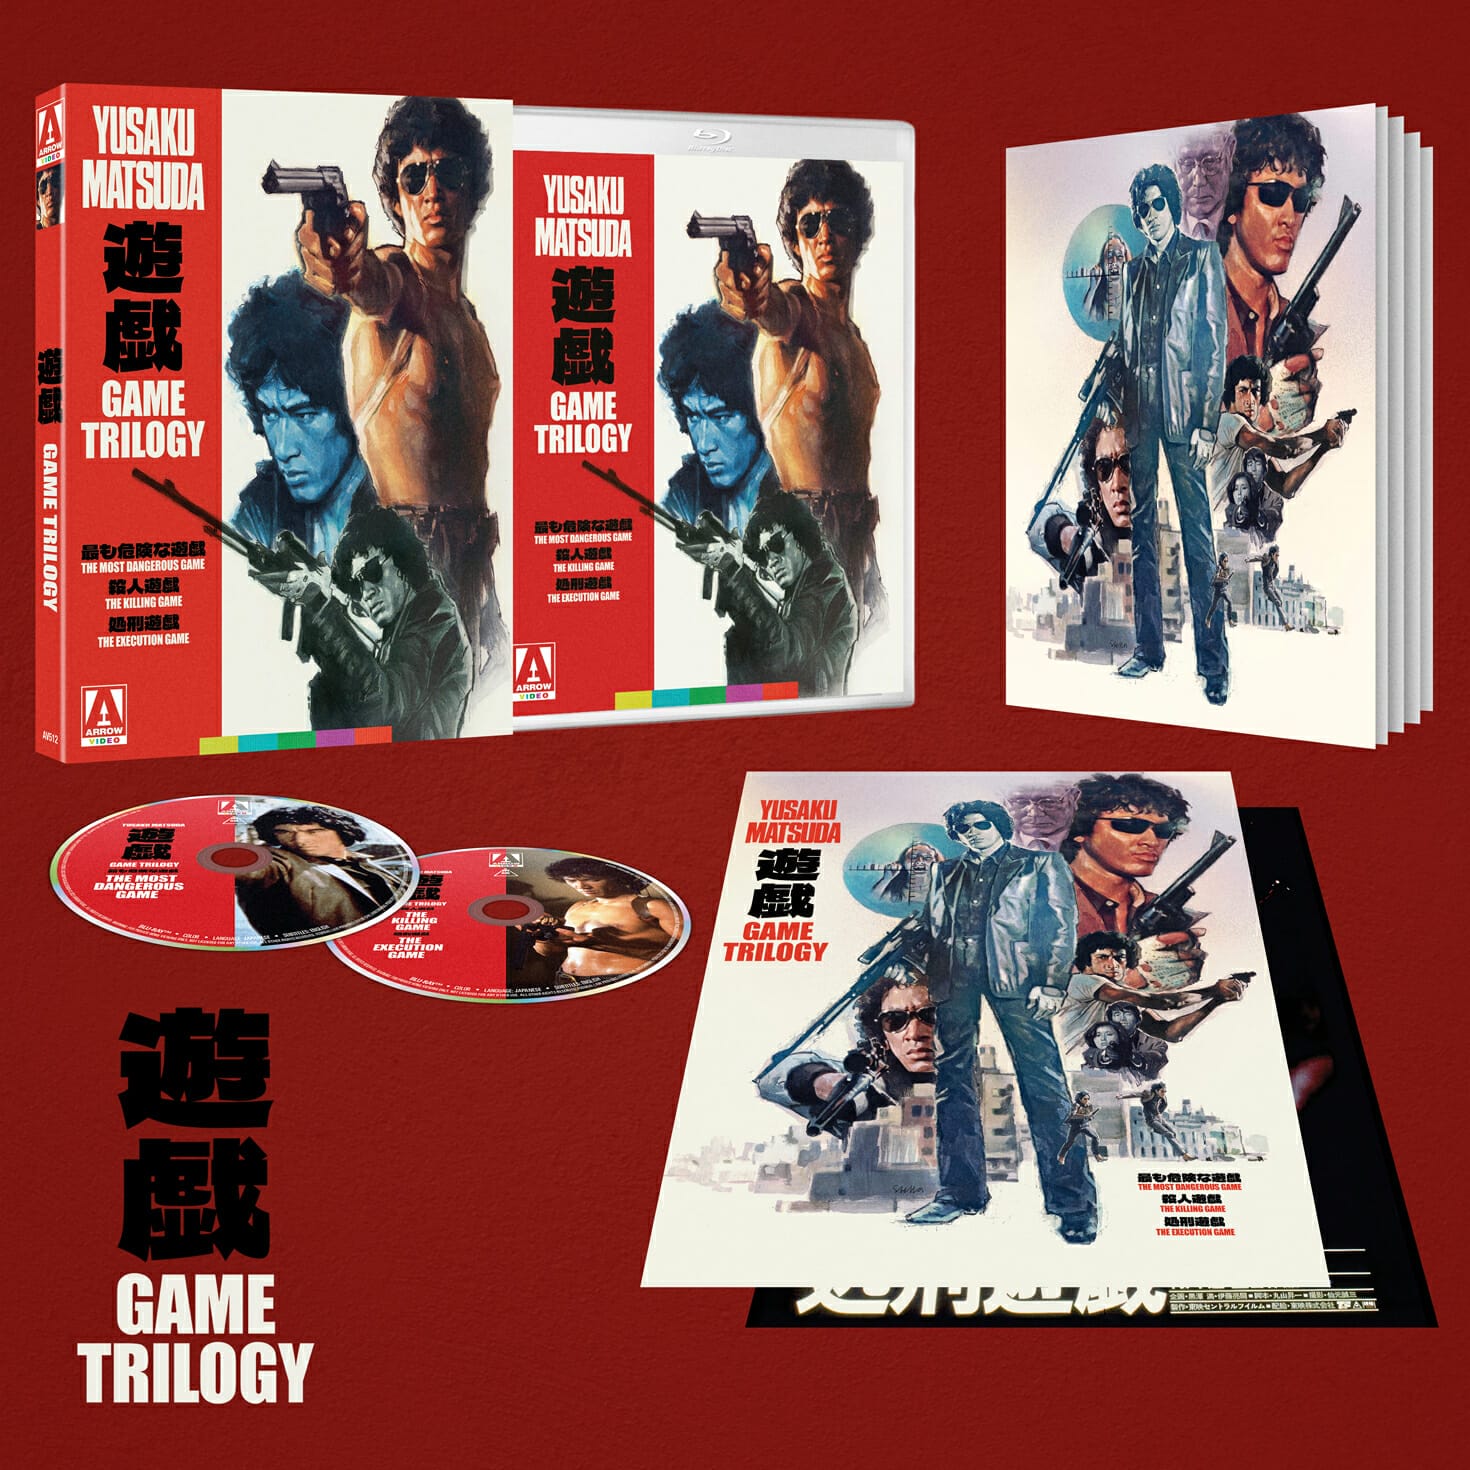 Dead or Alive Trilogy (Takashi Miike) (Arrow) (Blu-Ray) – DiabolikDVD